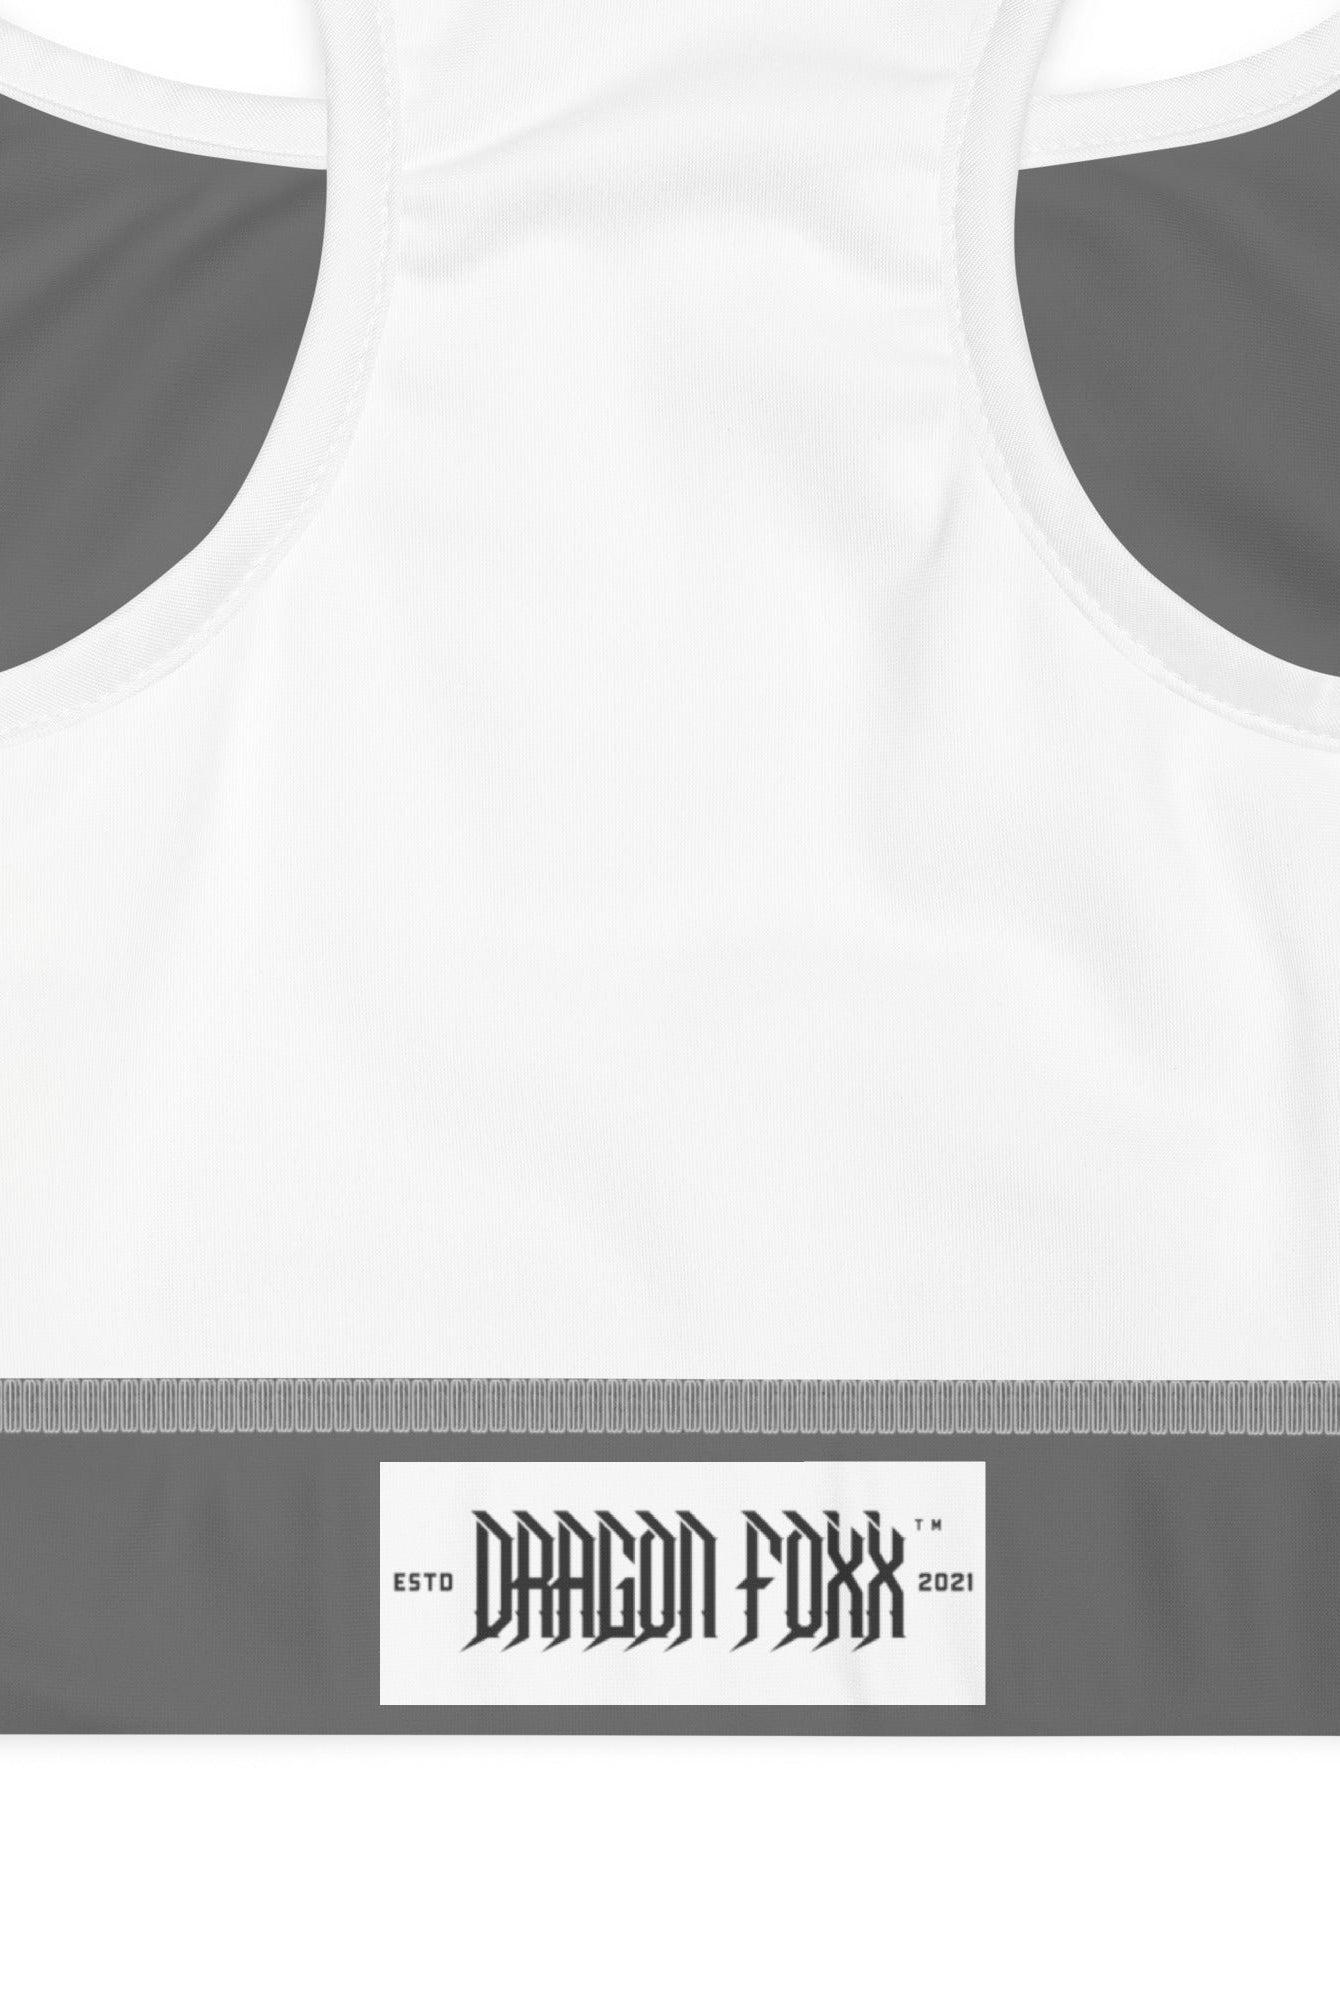 Grey Padded Sports Bra - Padded Sports Bra - DRAGON FOXX™ - Grey Padded Sports Bra - 5663670_10862 - Black/Grey - XS - Padded Sports Bra - Black/Grey Padded Sports Bra - Dragon Foxx™ - Dragon Foxx™ Padded Sports Bra